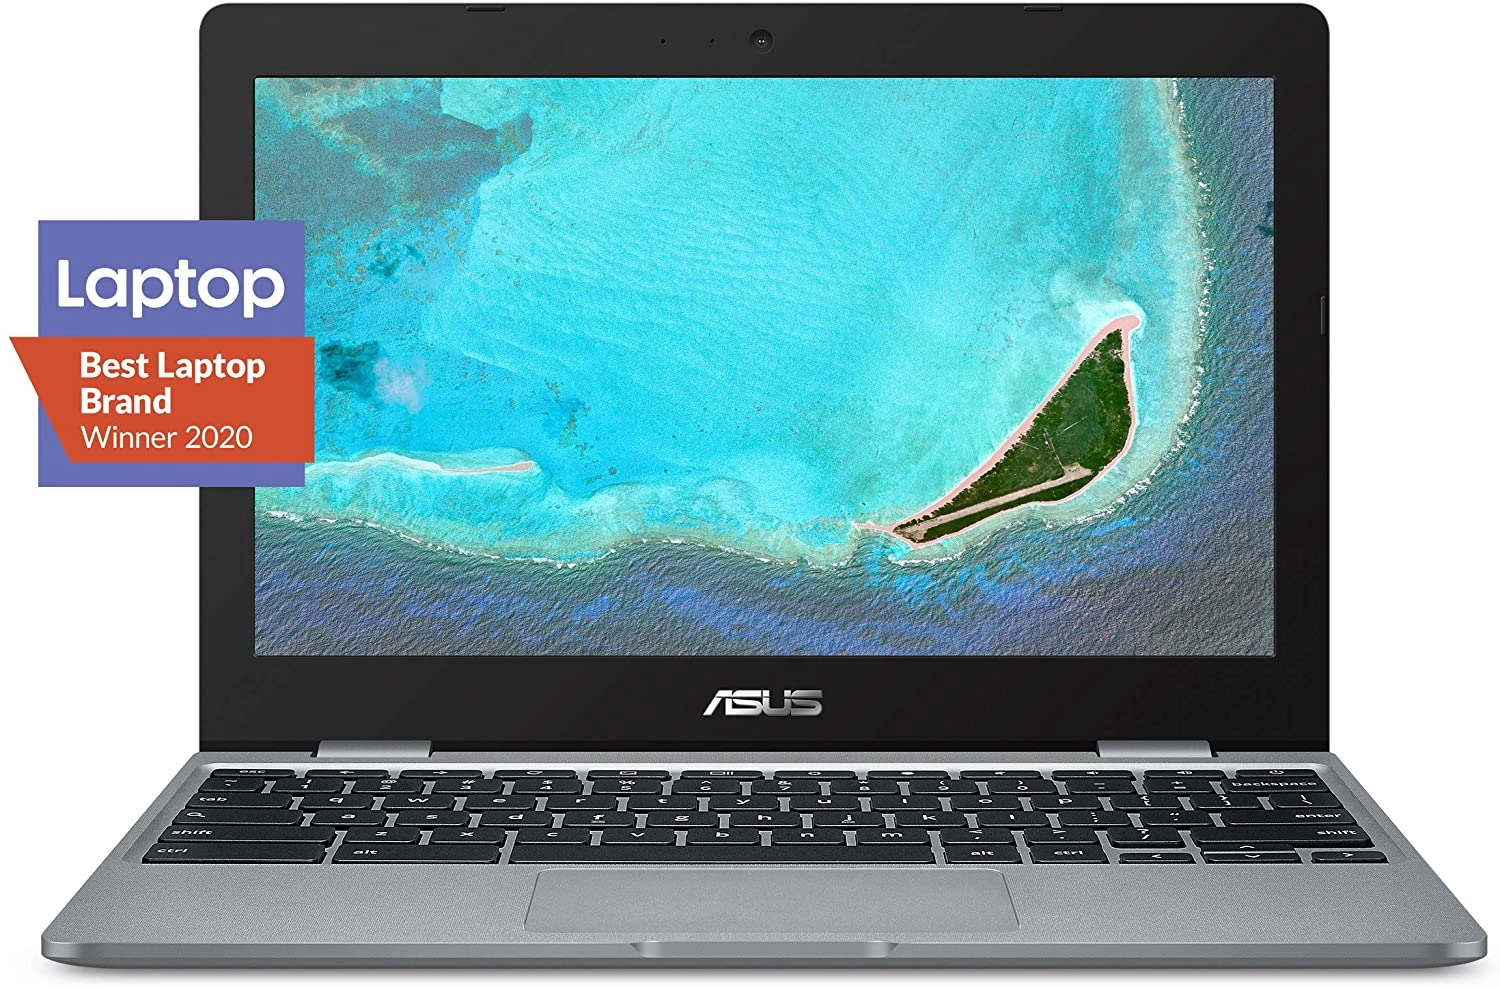 Asus Chromebook C223 laptop image